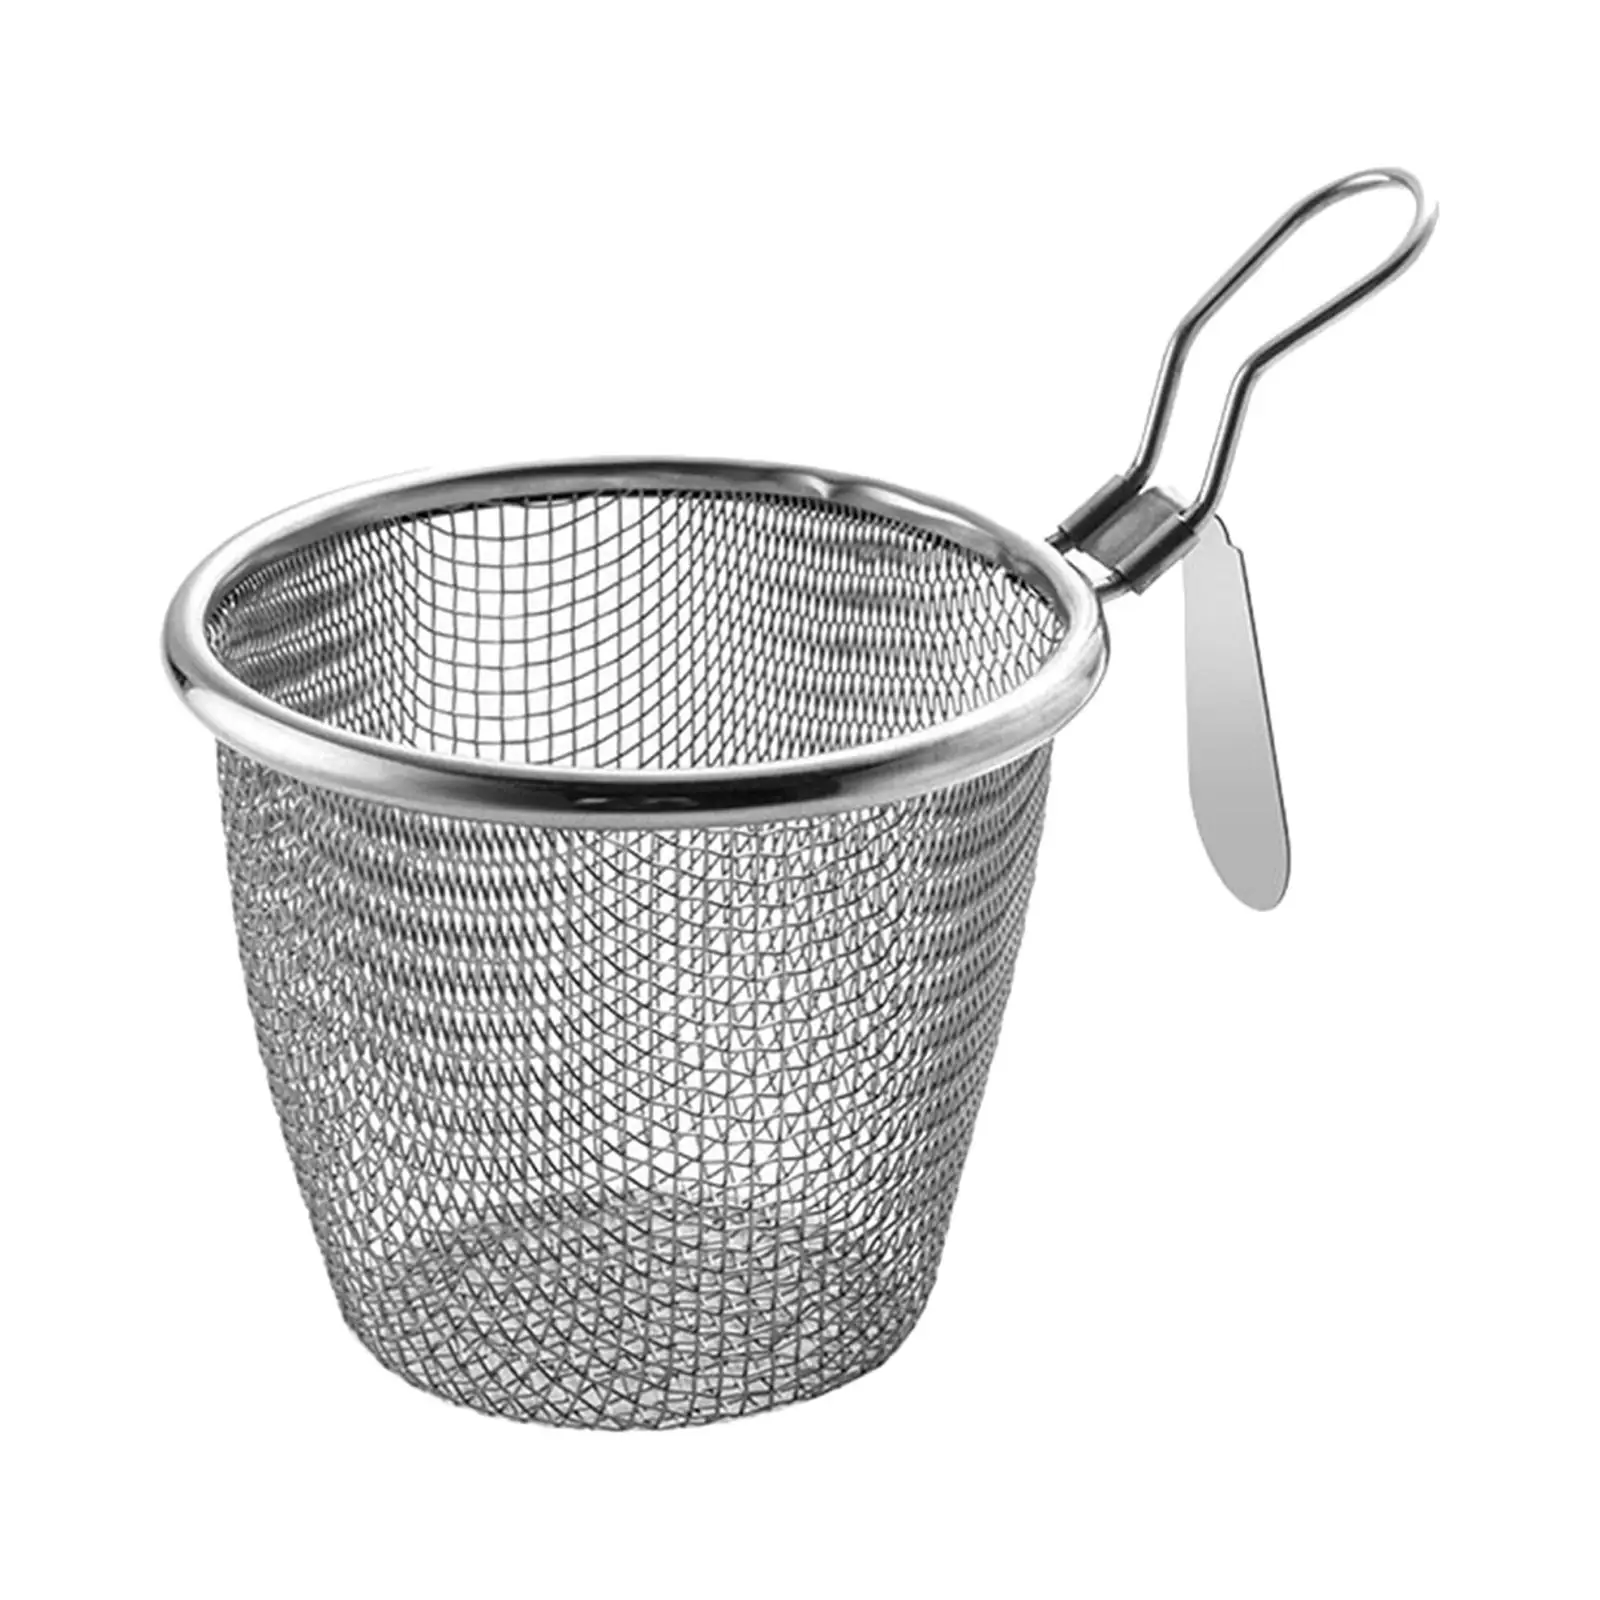 Stainless Steel Mesh Strainer Fry Basket Food Colander for Noodles Pasta Frying Cooking